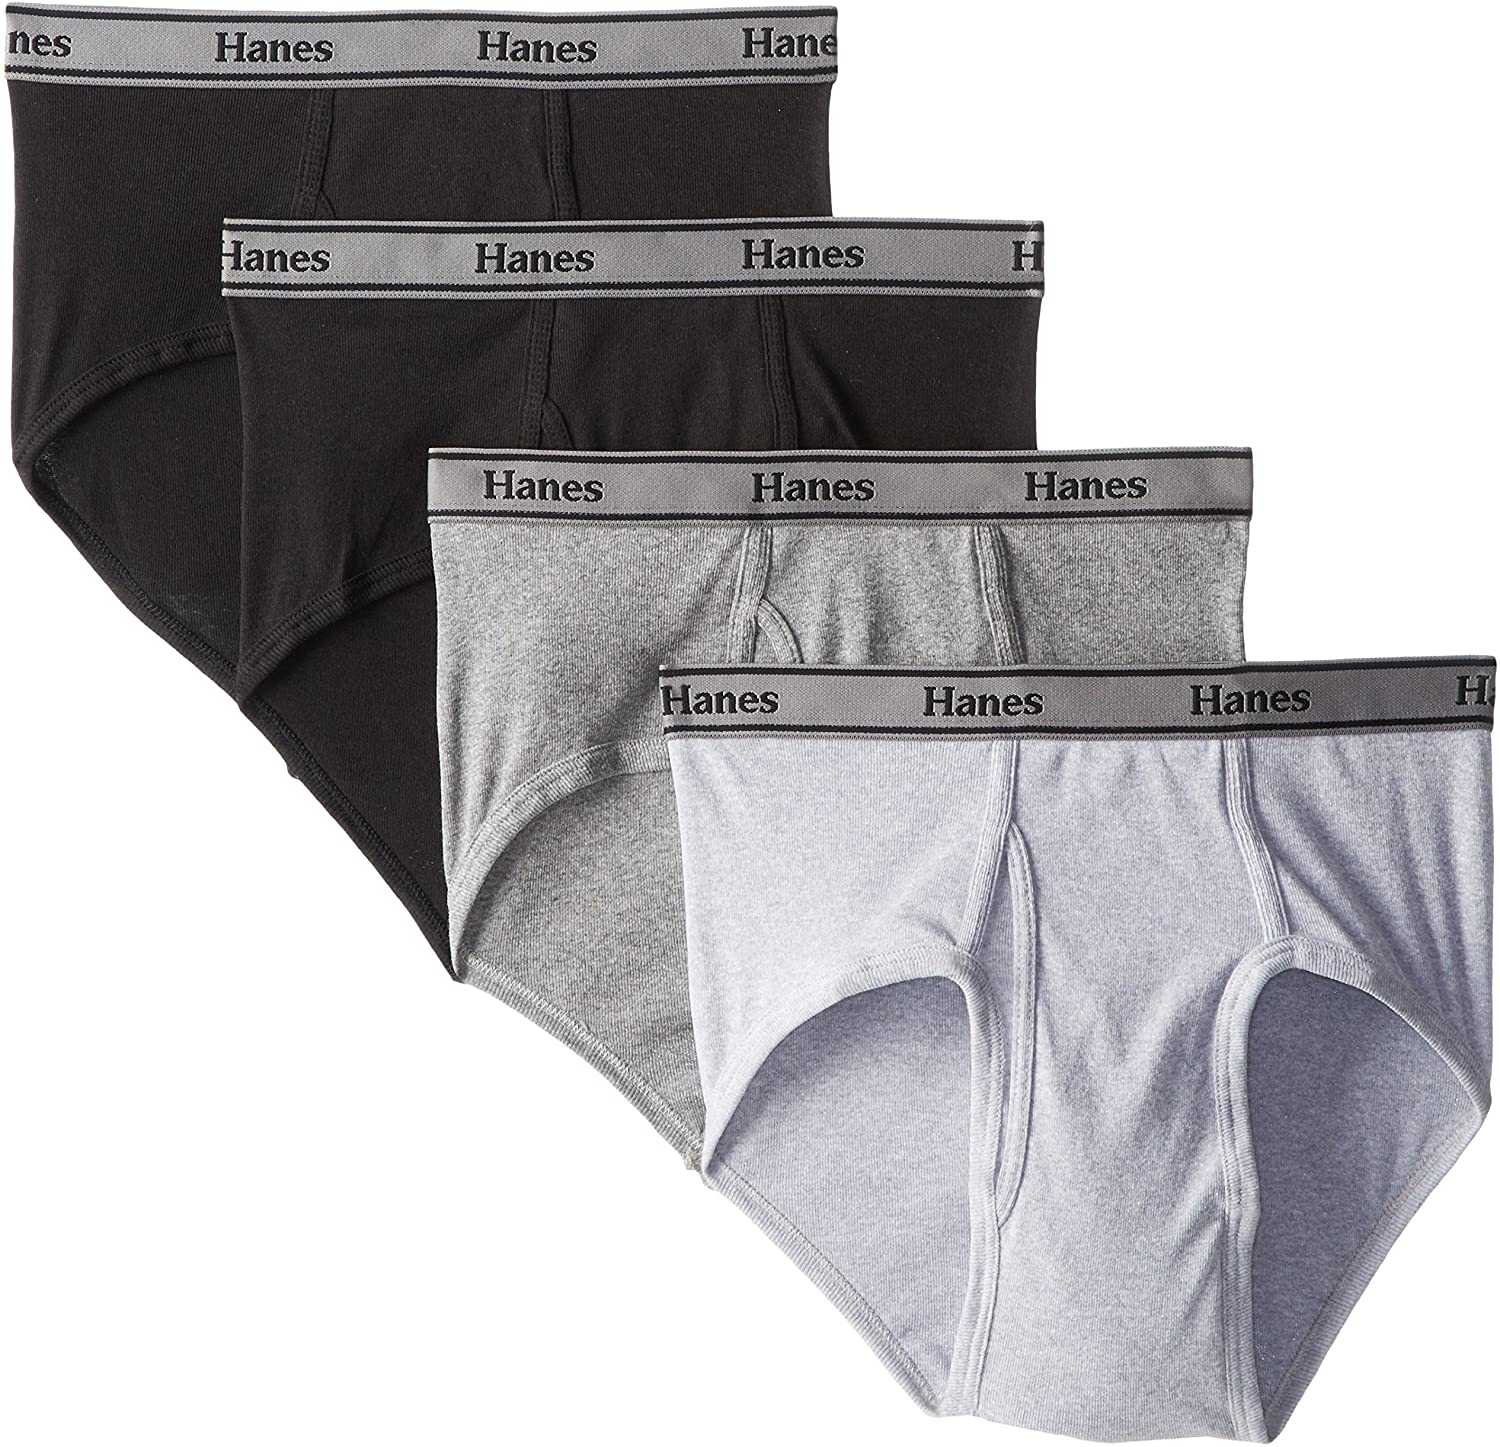 Hanes Ultimate Men's 4-Pack FreshIQ Tagless Cotton Brief | eBay